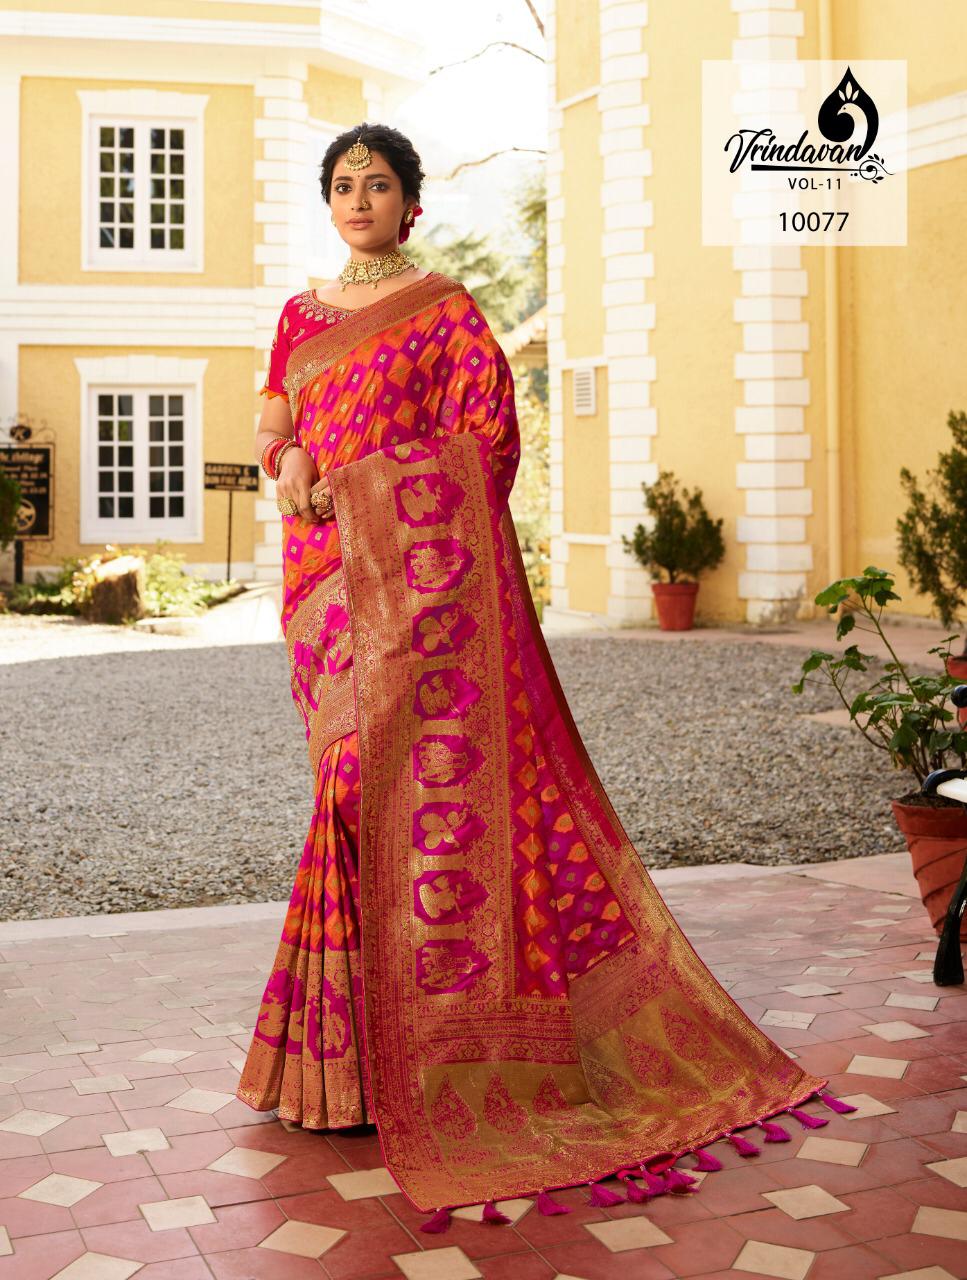 Vrindavan Vol-11 10073 To 10087 Series By Royal Exlclusive Heavy Blouse Concept Marraige Wear Silk Sarees Catalog Wholesaler